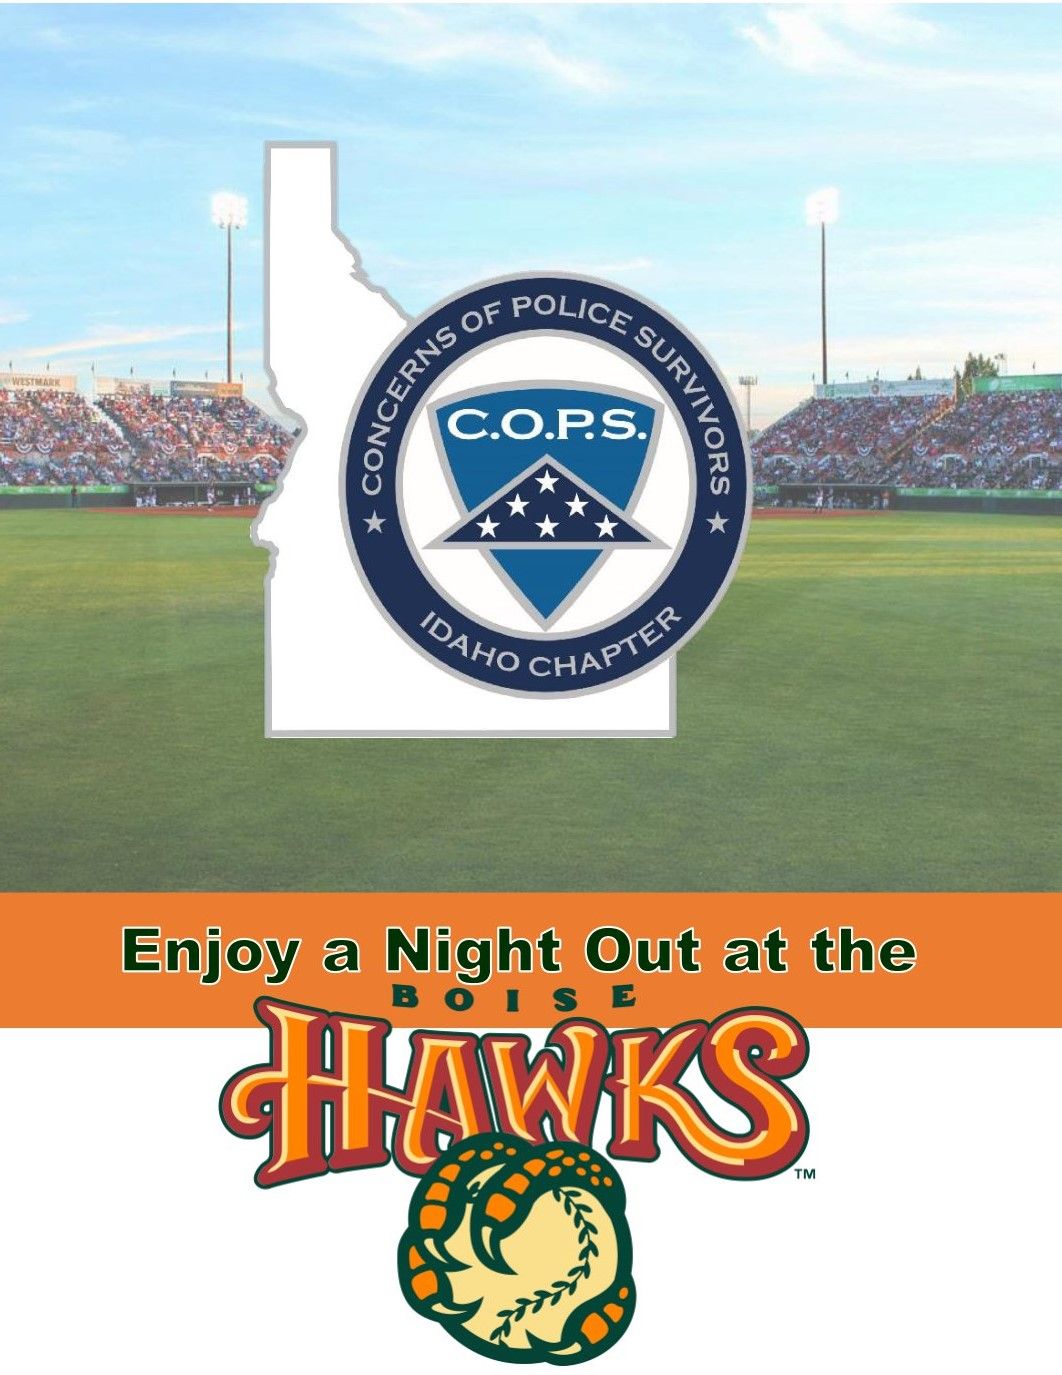 Idaho C.O.P.S. Night with the Boise Hawks